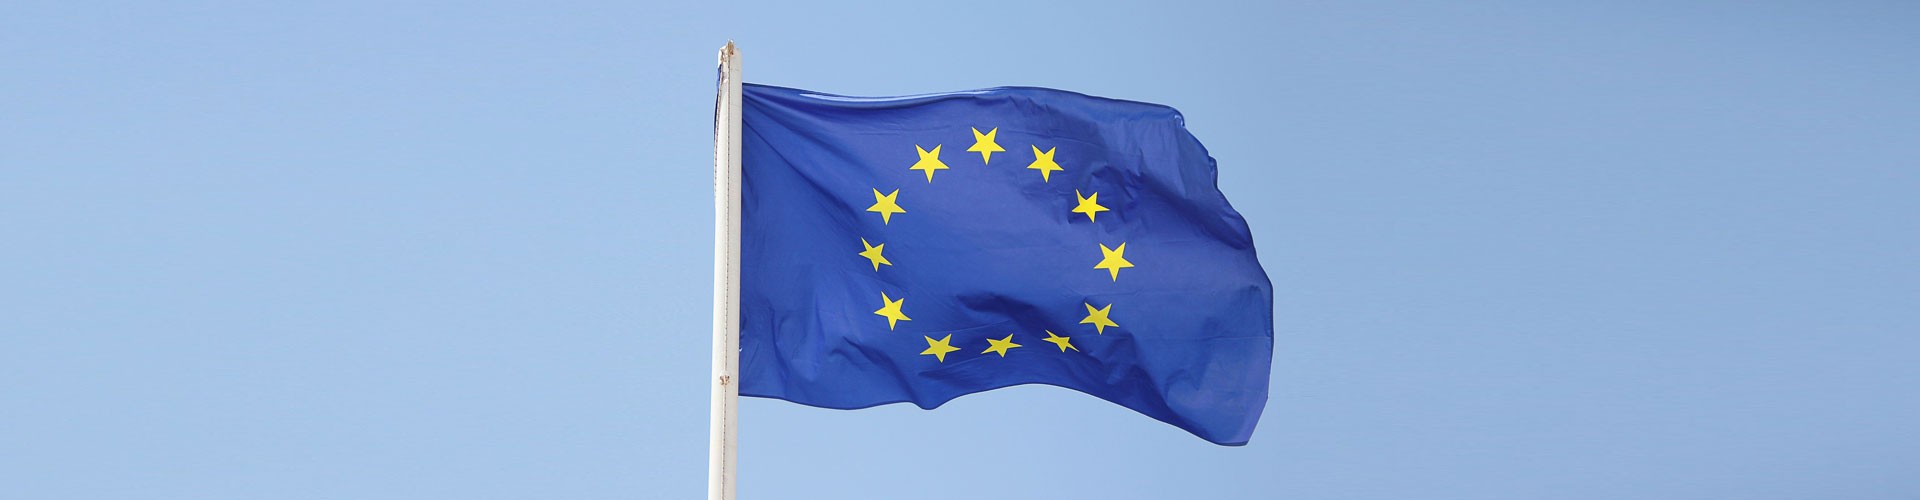 EU flag on blue sky background